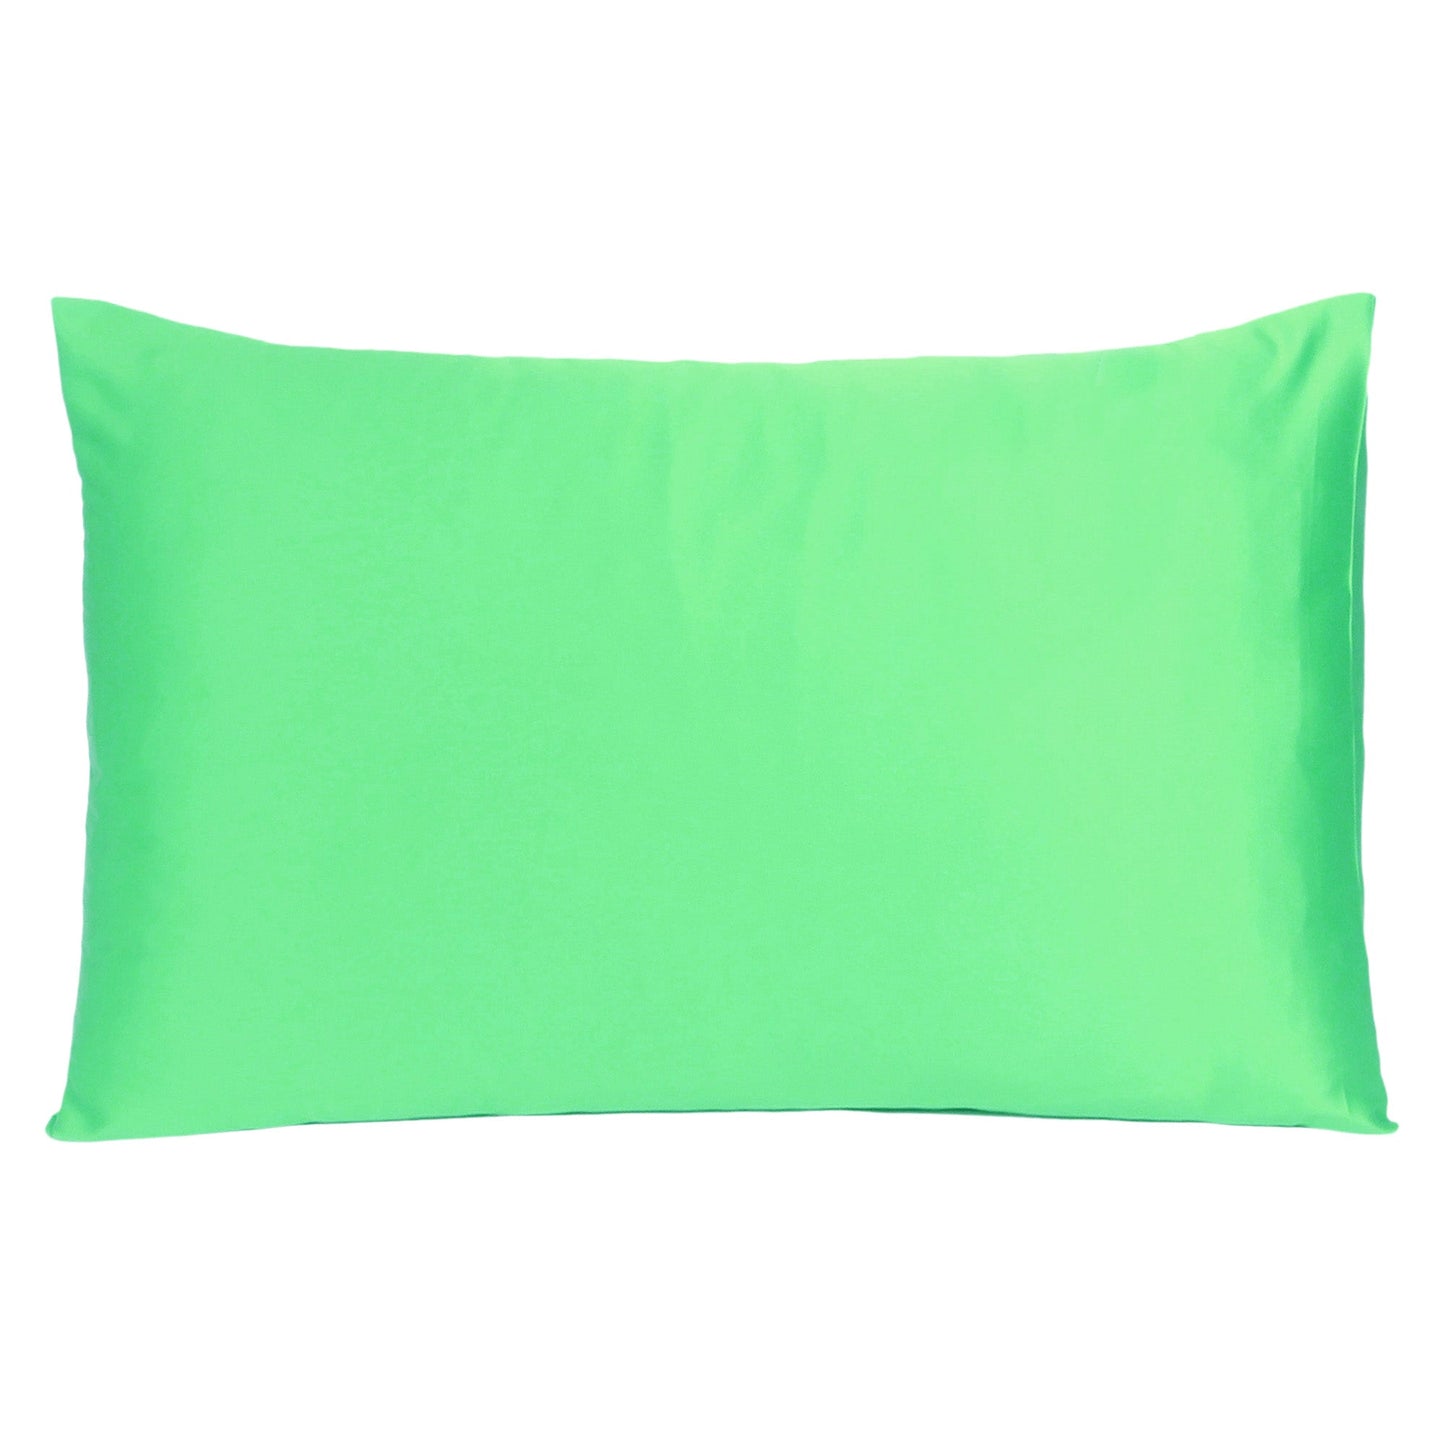 Luxury Soft Plain Satin Silk Pillowcases in Set of 2 - Poison Green